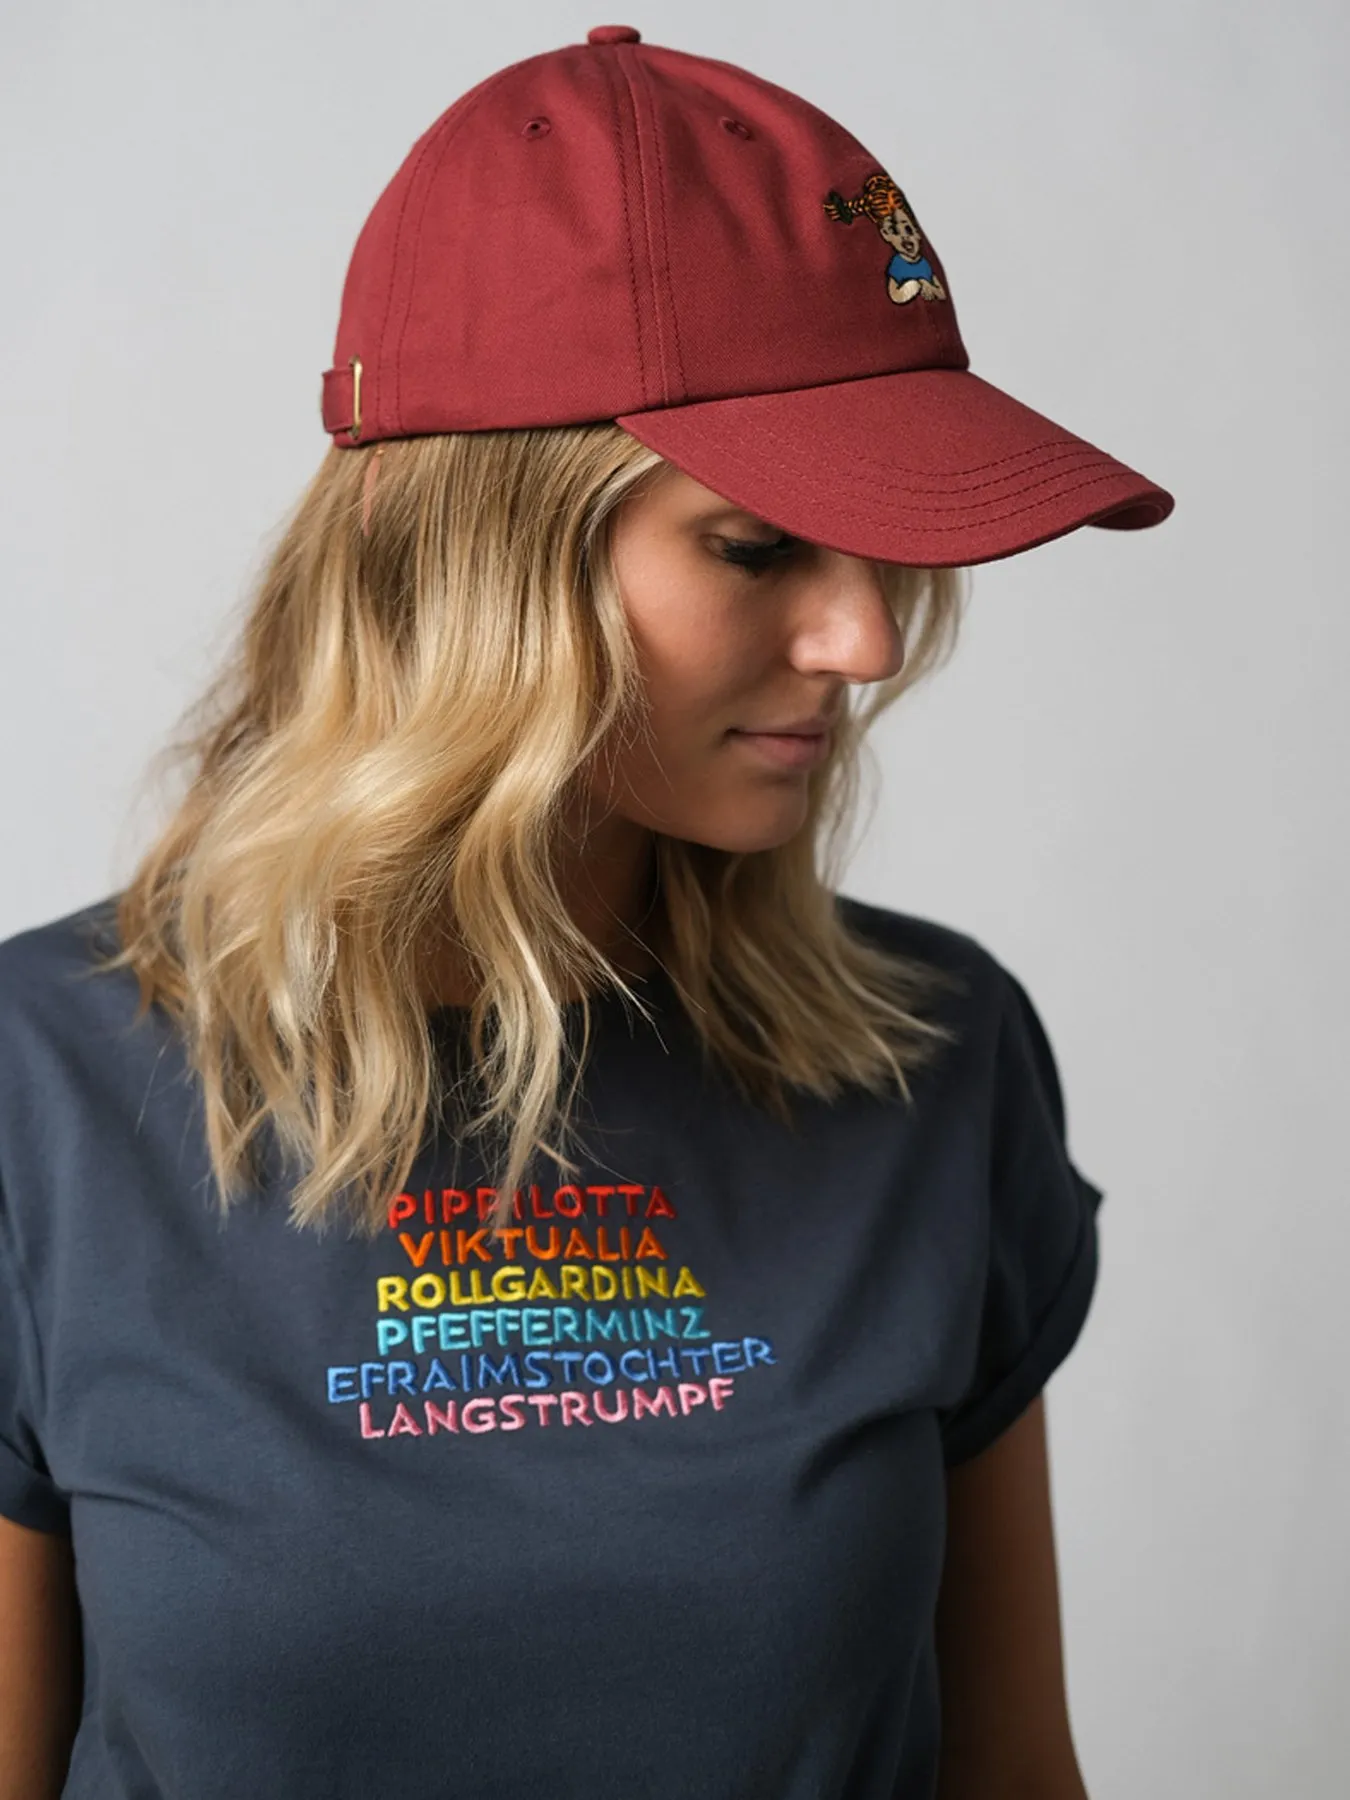 T-shirt Pippi Longstocking - Darkblue - German